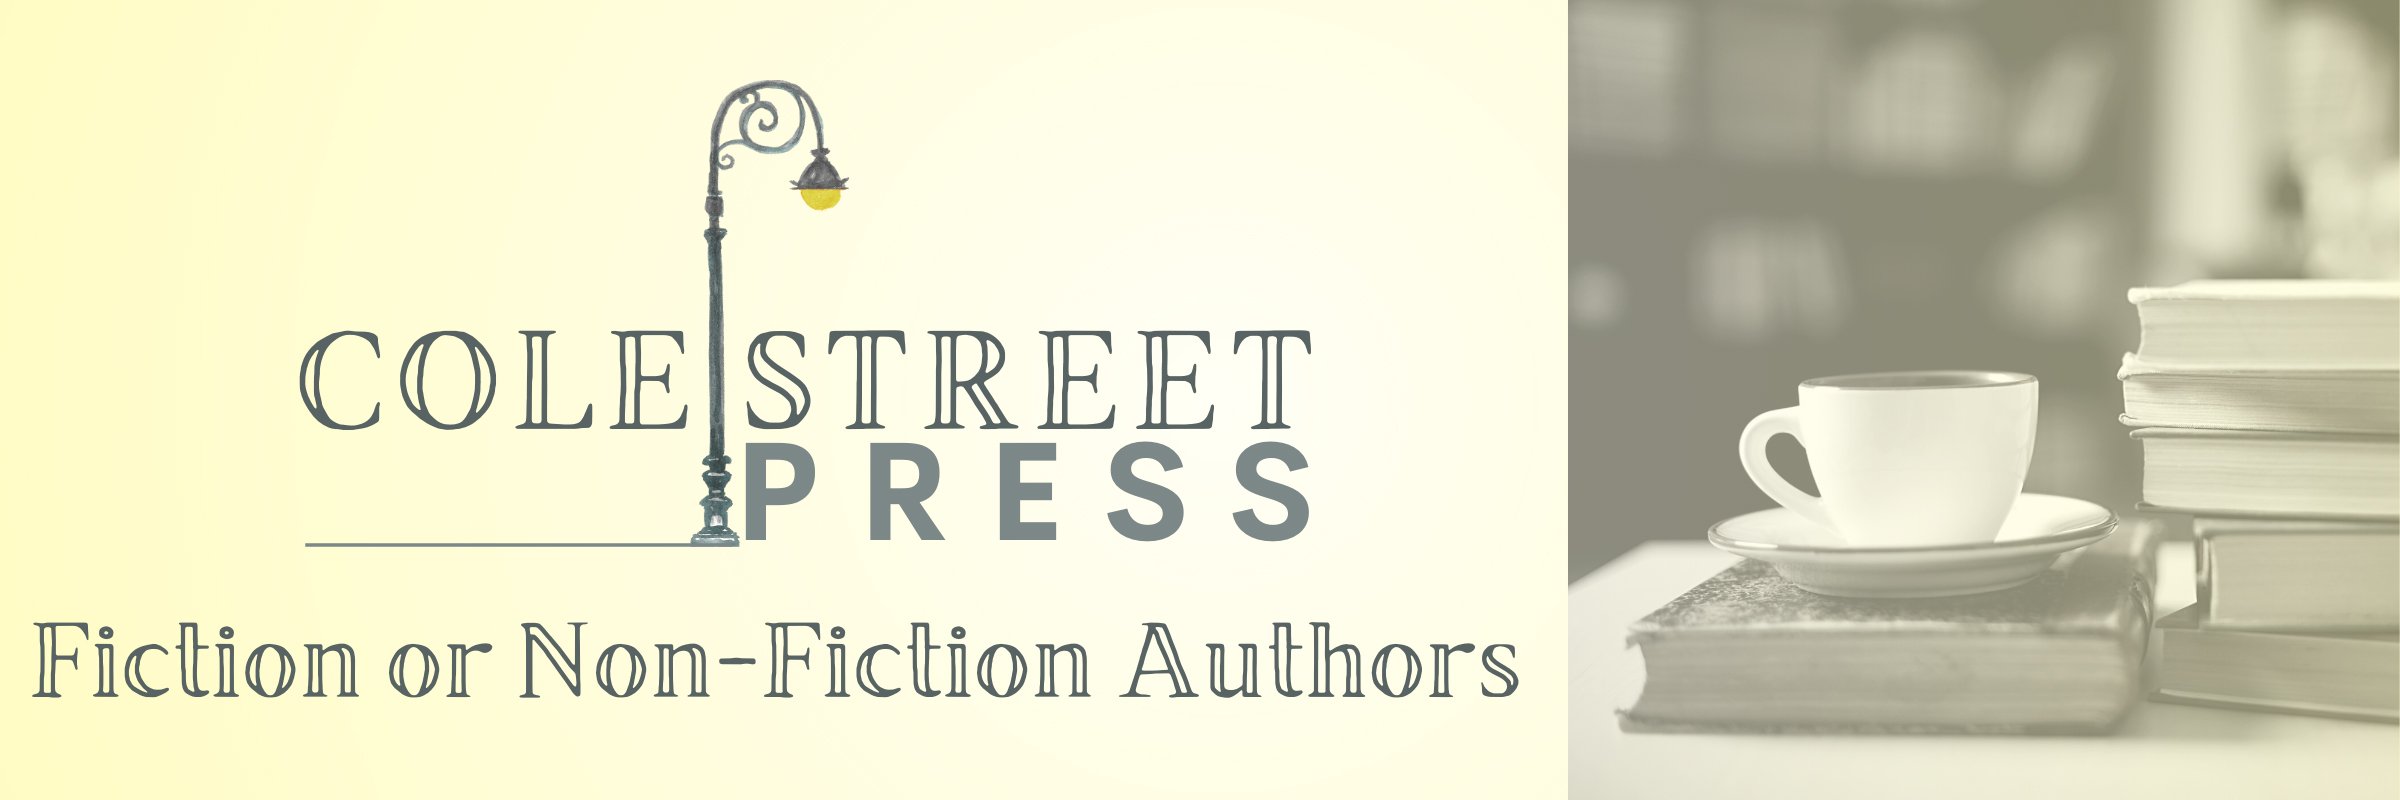 Cole Street Press - Fiction or Non-Fiction Authors